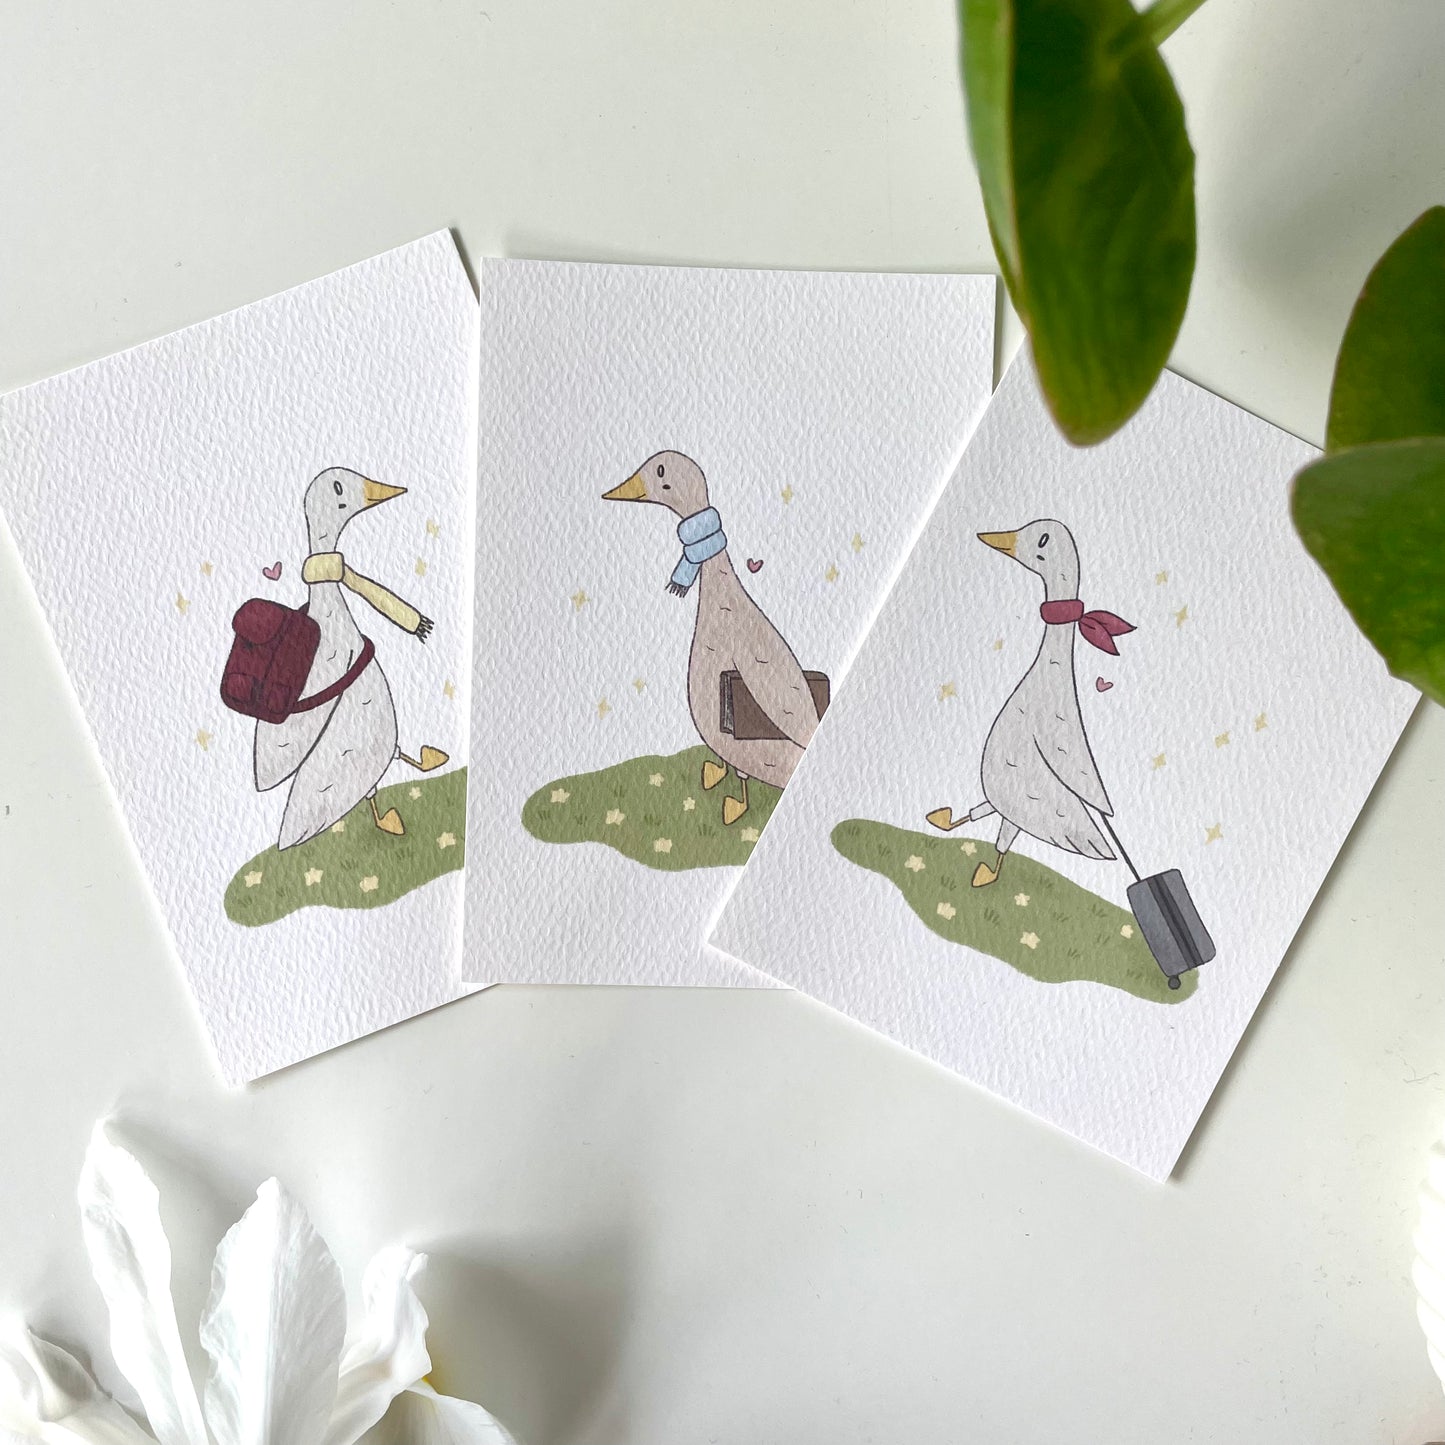 Geese card set